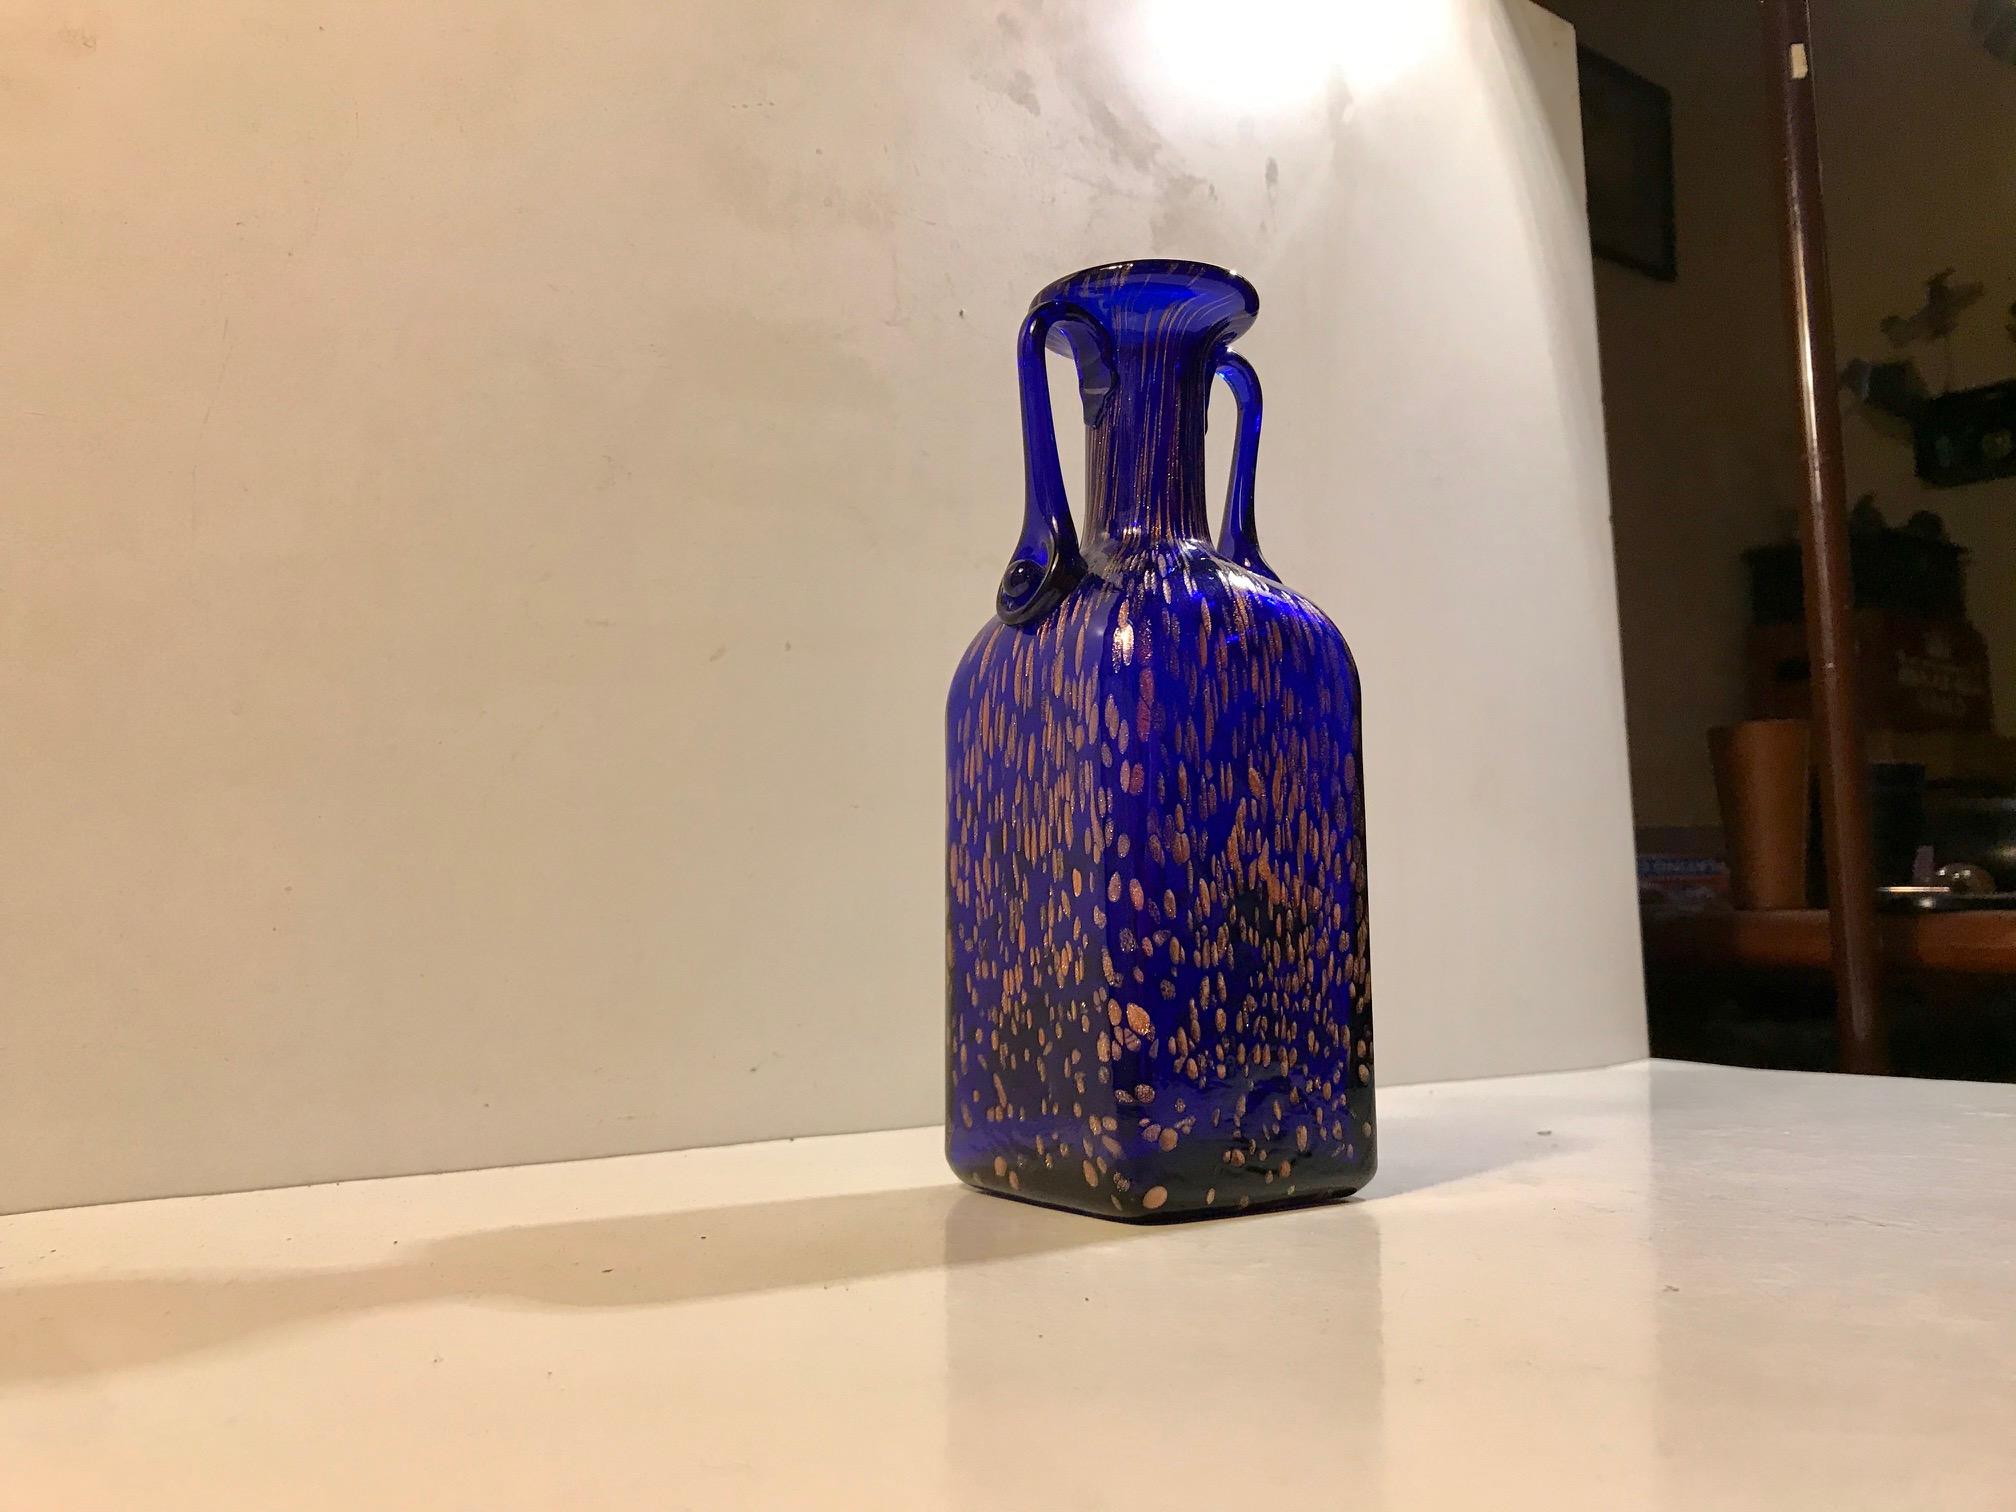 Mouth-blown blue crystal vase with stylized handles and rose gold speckles. Designed by Joska in Bavaria, Germany. Label Joska. Silberberg Kristall, Mundgeblassen, Waldglashütte.